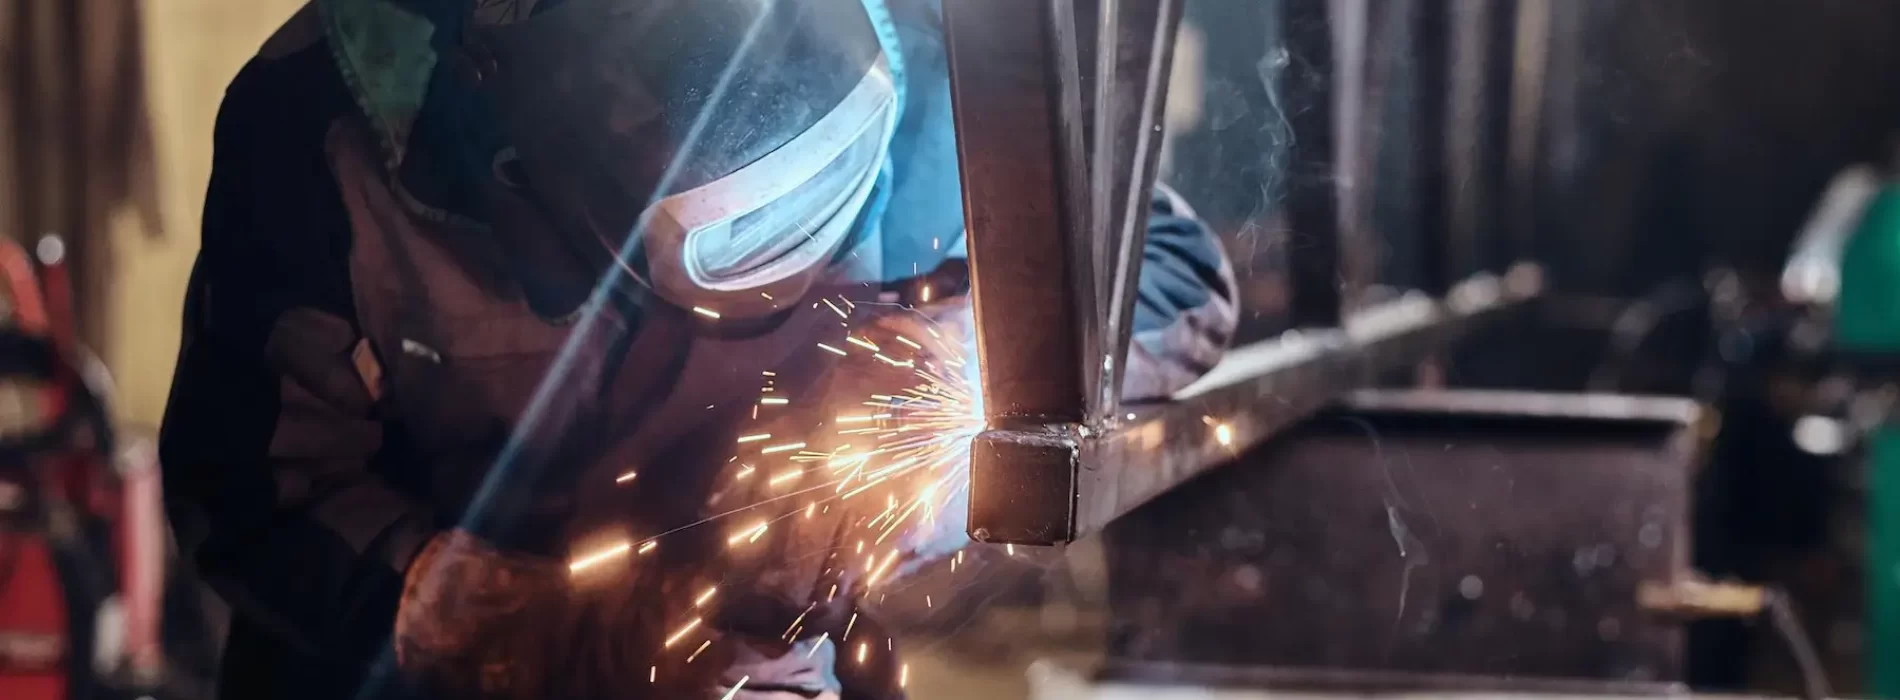 man-is-working-metal-factory-he-is-welding-piece-rail-using-special-tools_613910-3861.jpg